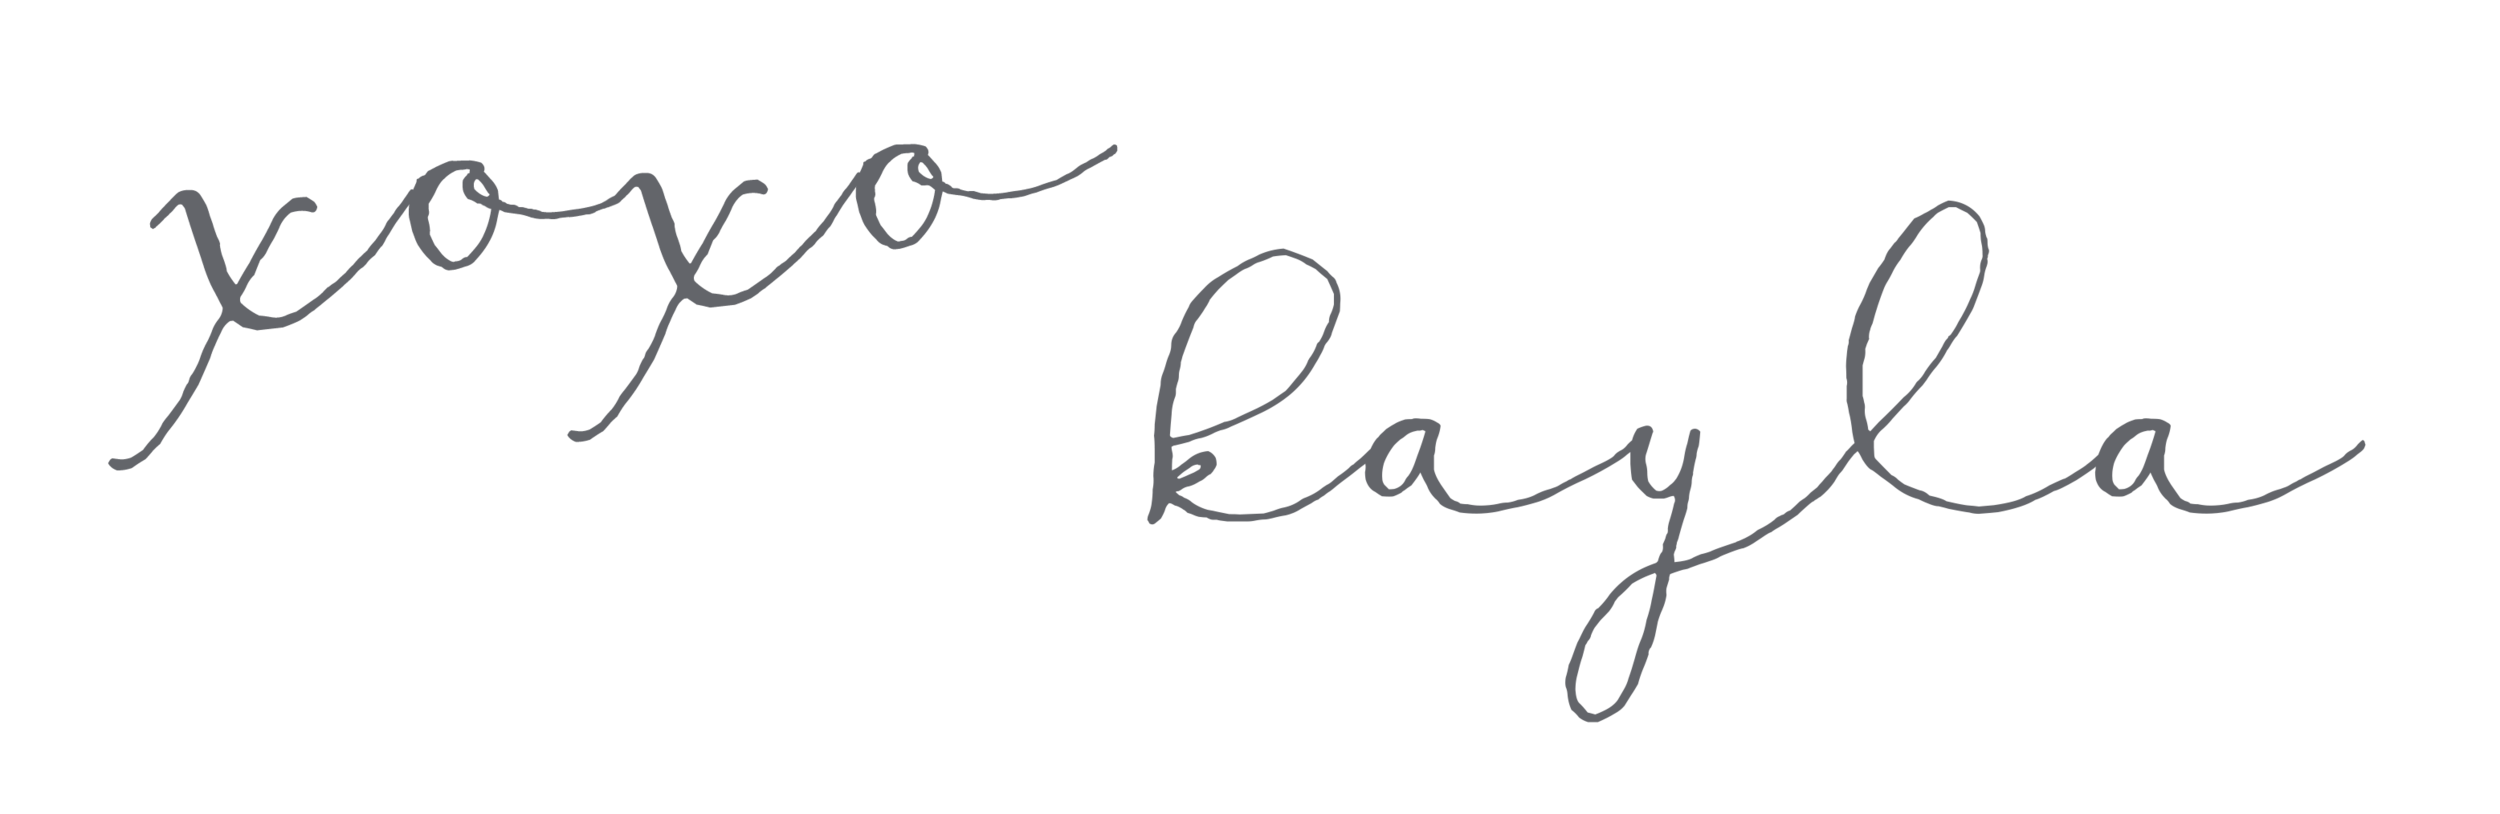 XOXO - Signature GIFT for Kayla.png